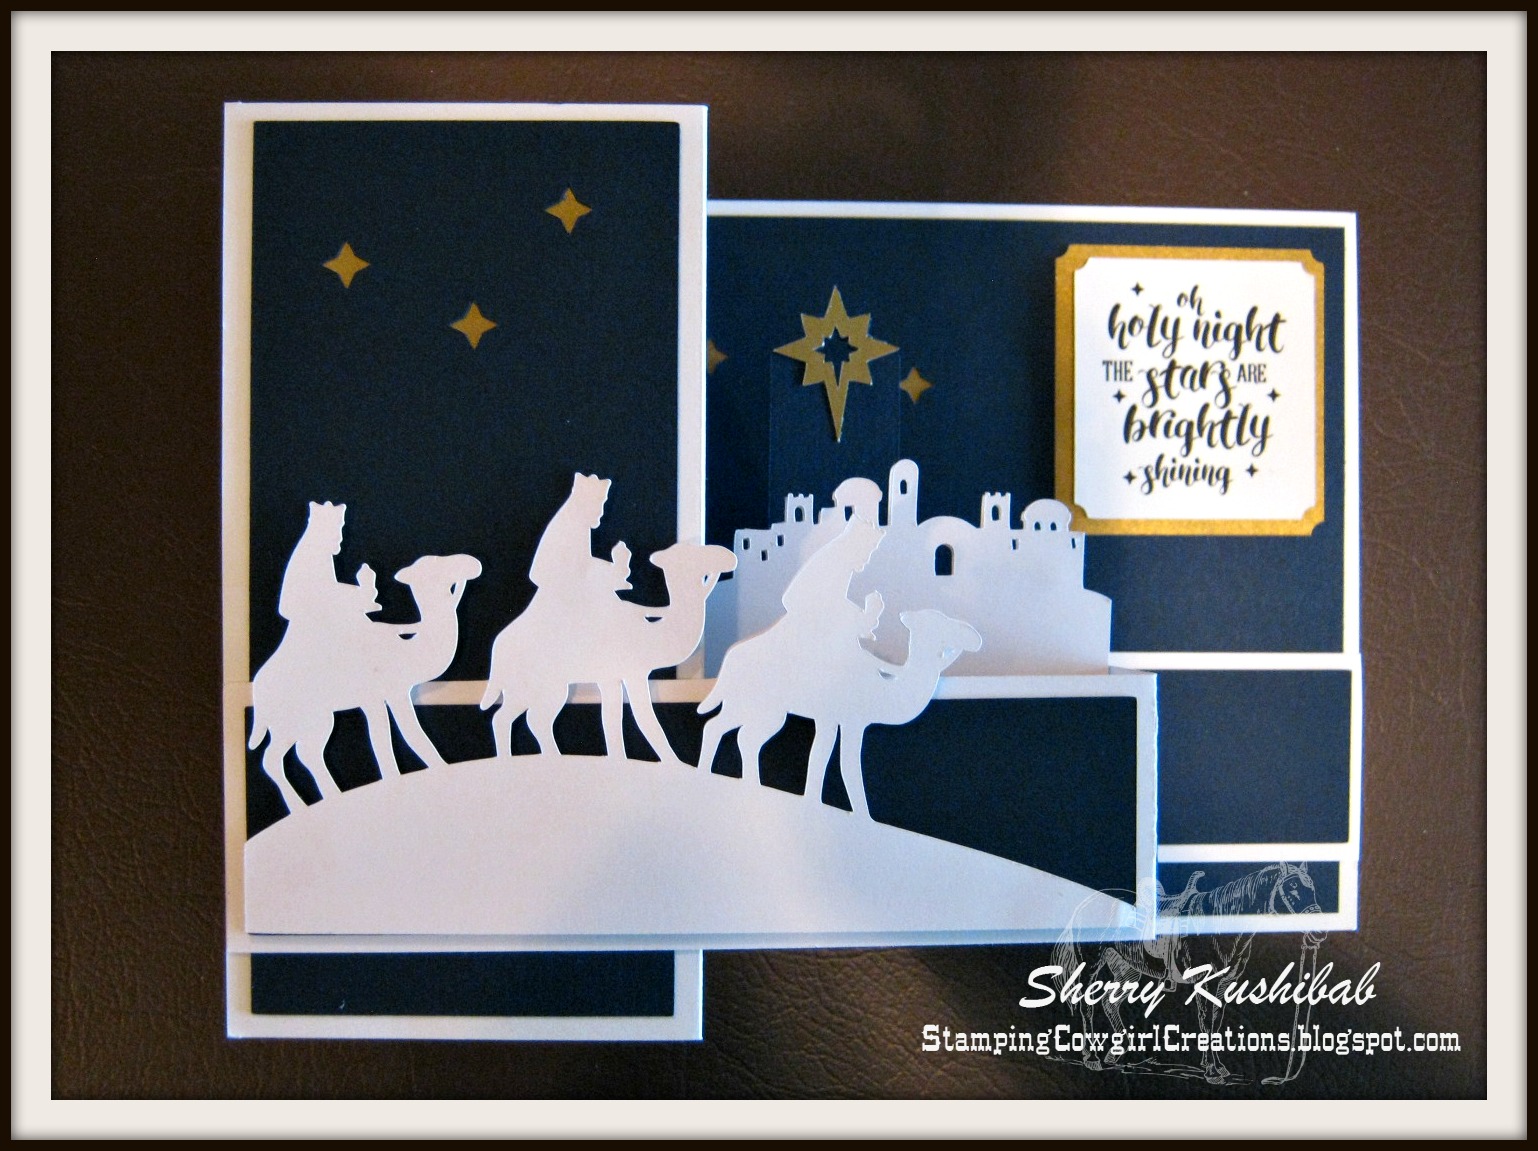 Oh Holy Night Nativity 3 - Lori Whitlock's SVG Shop